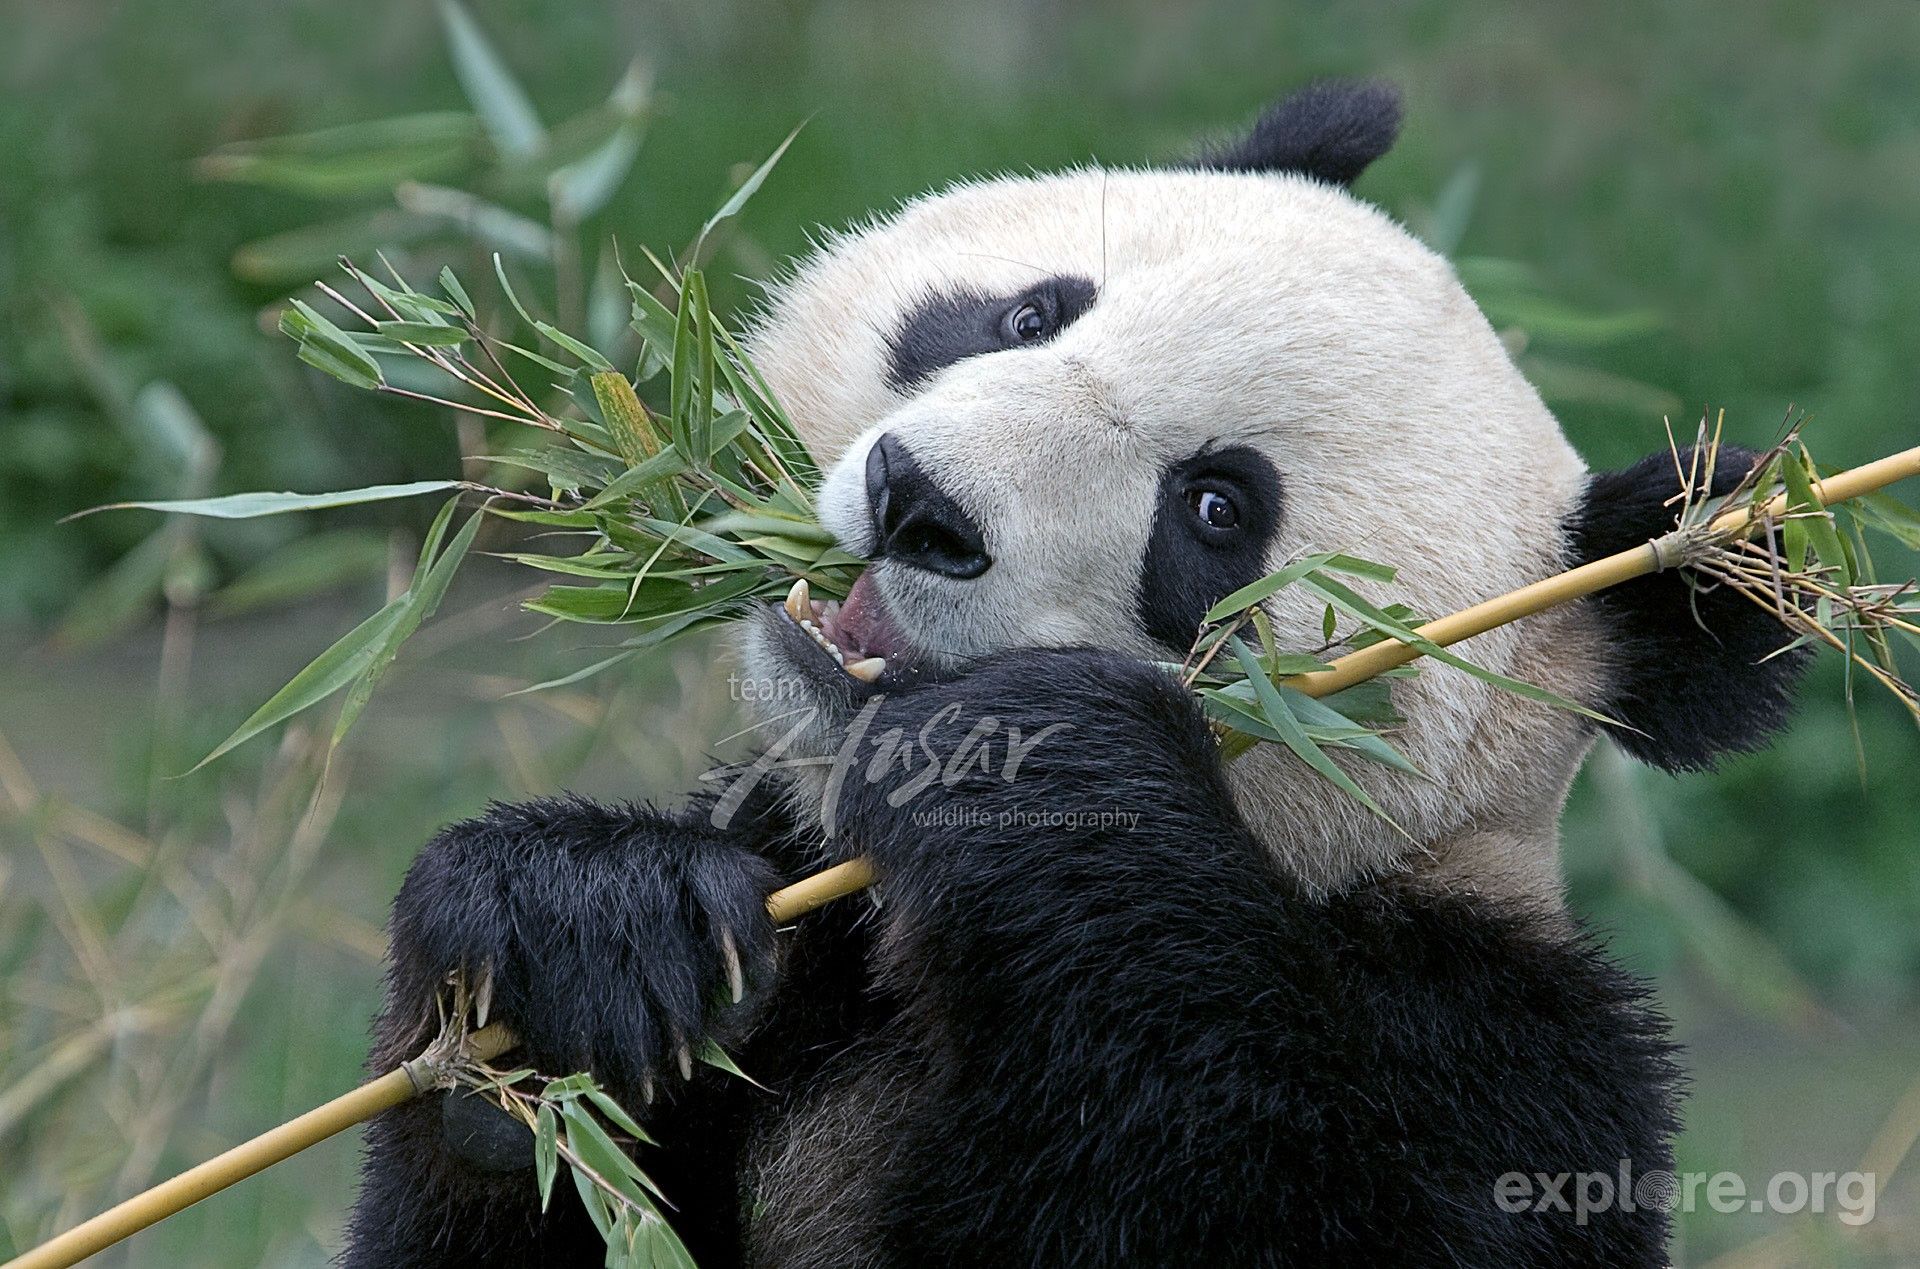 adolescent-panda-eating-bamboo-pandas-are-very.jpg